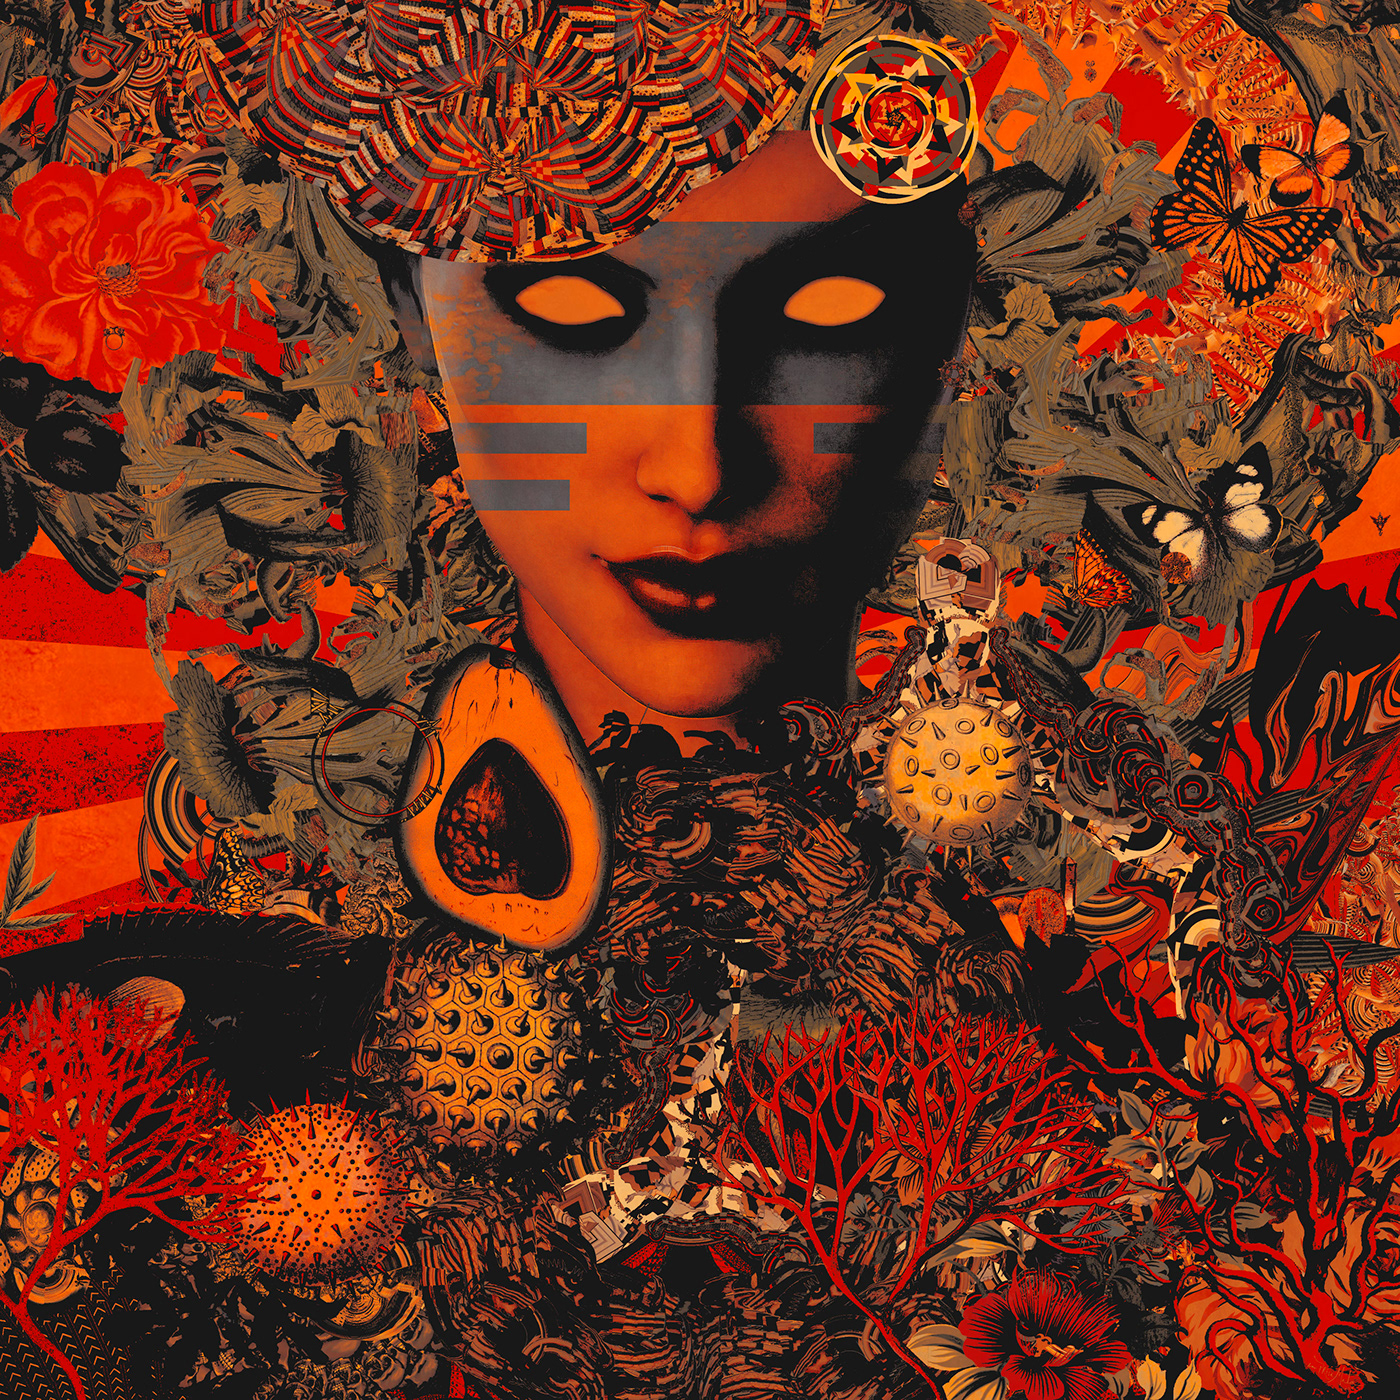 artprint poster gig posters psychedelic surreal art album covers ILLUSTRATION  pop surrealism spain